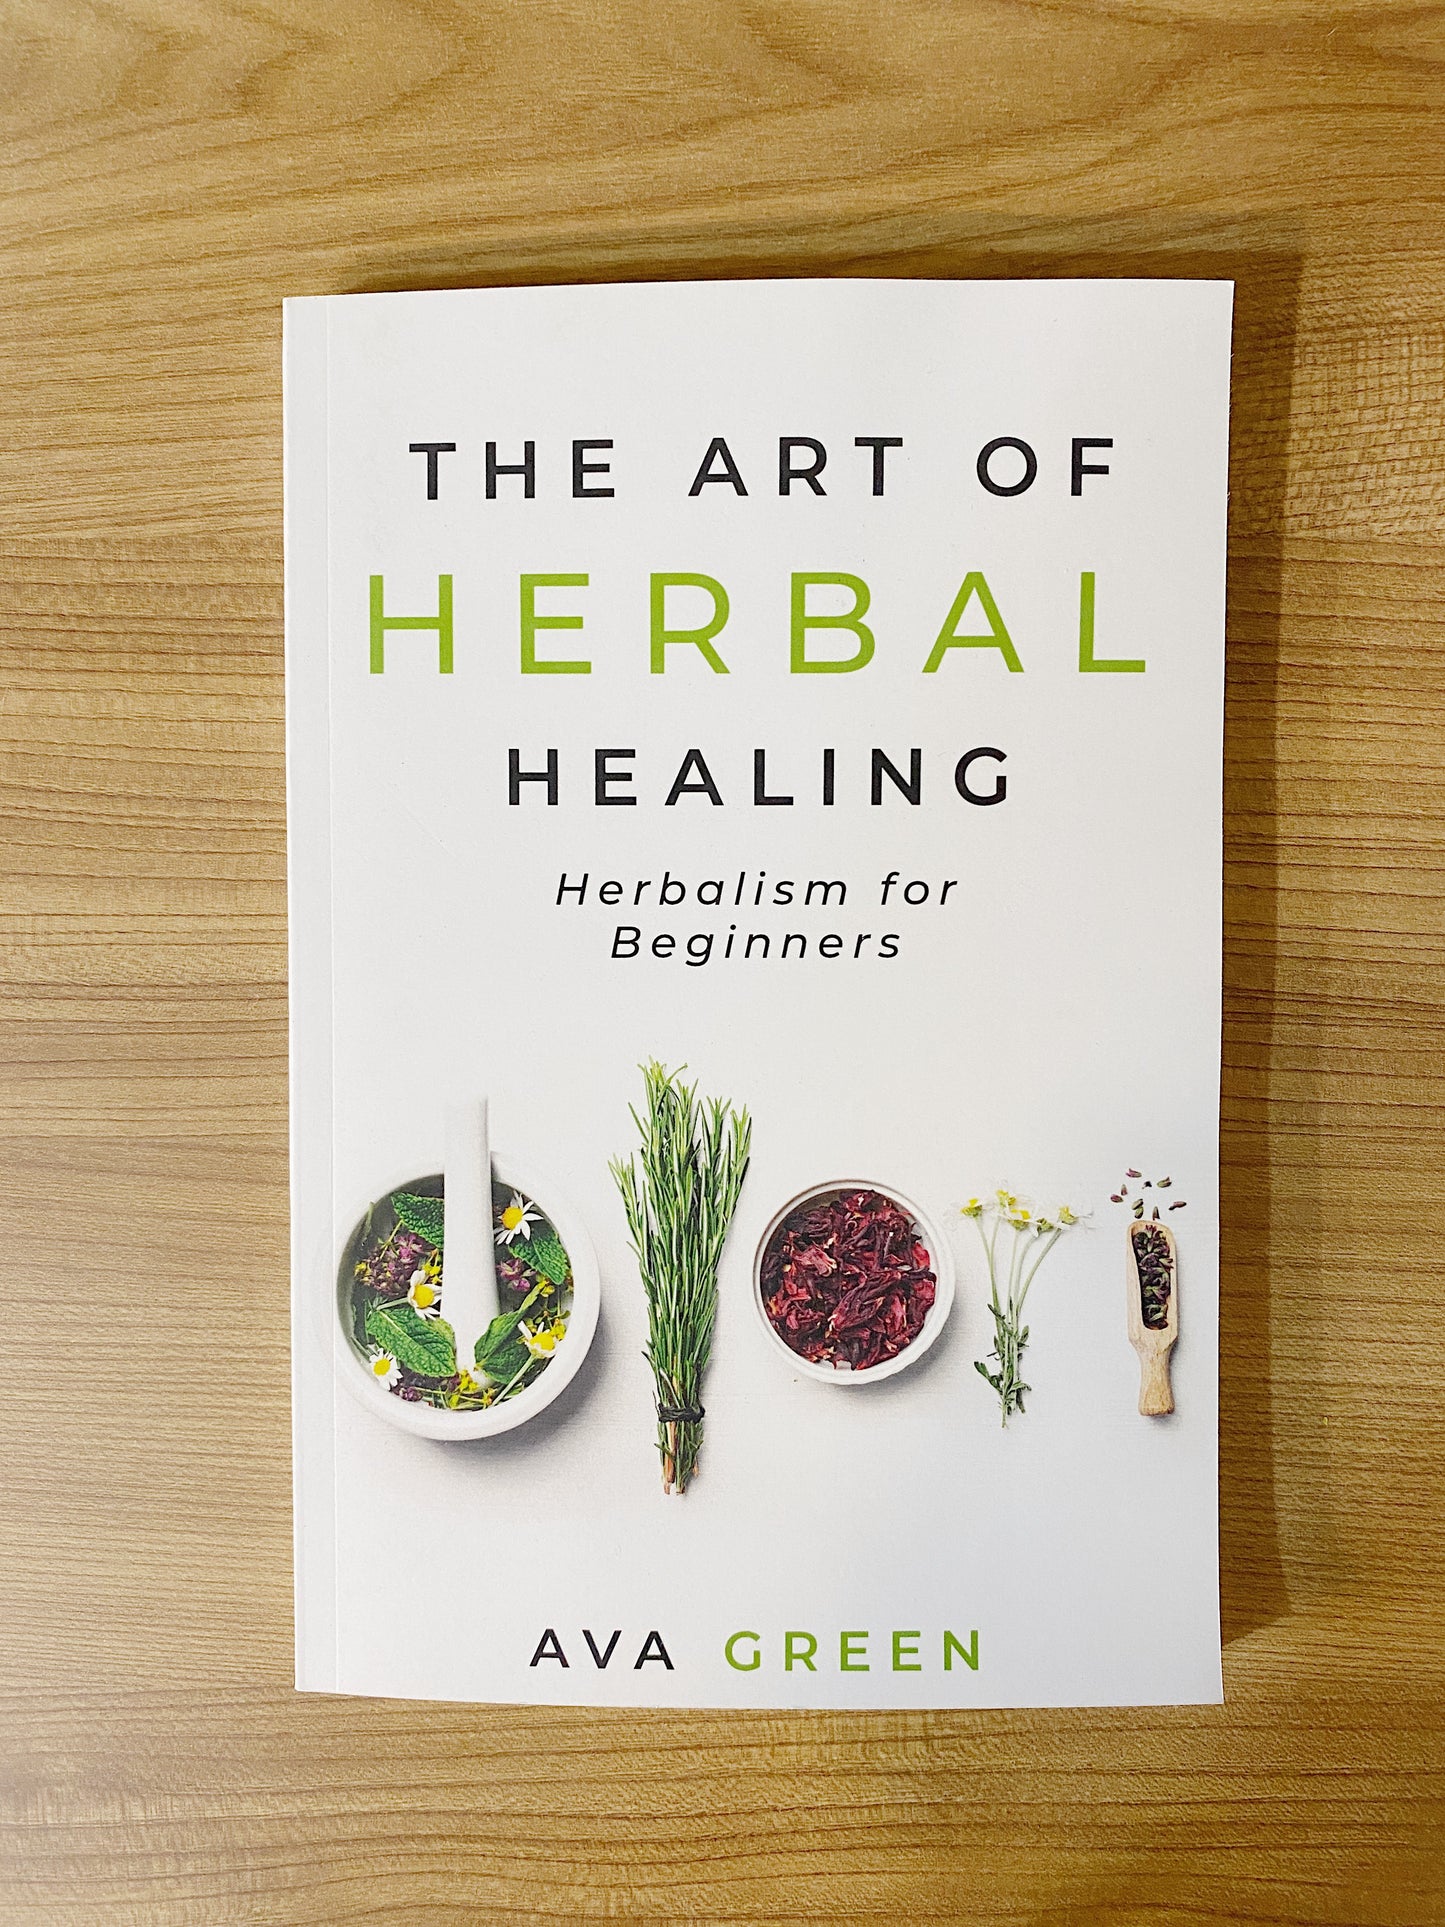 Ava Green - The Art of Herbal Healing: Herbalism for Beginners